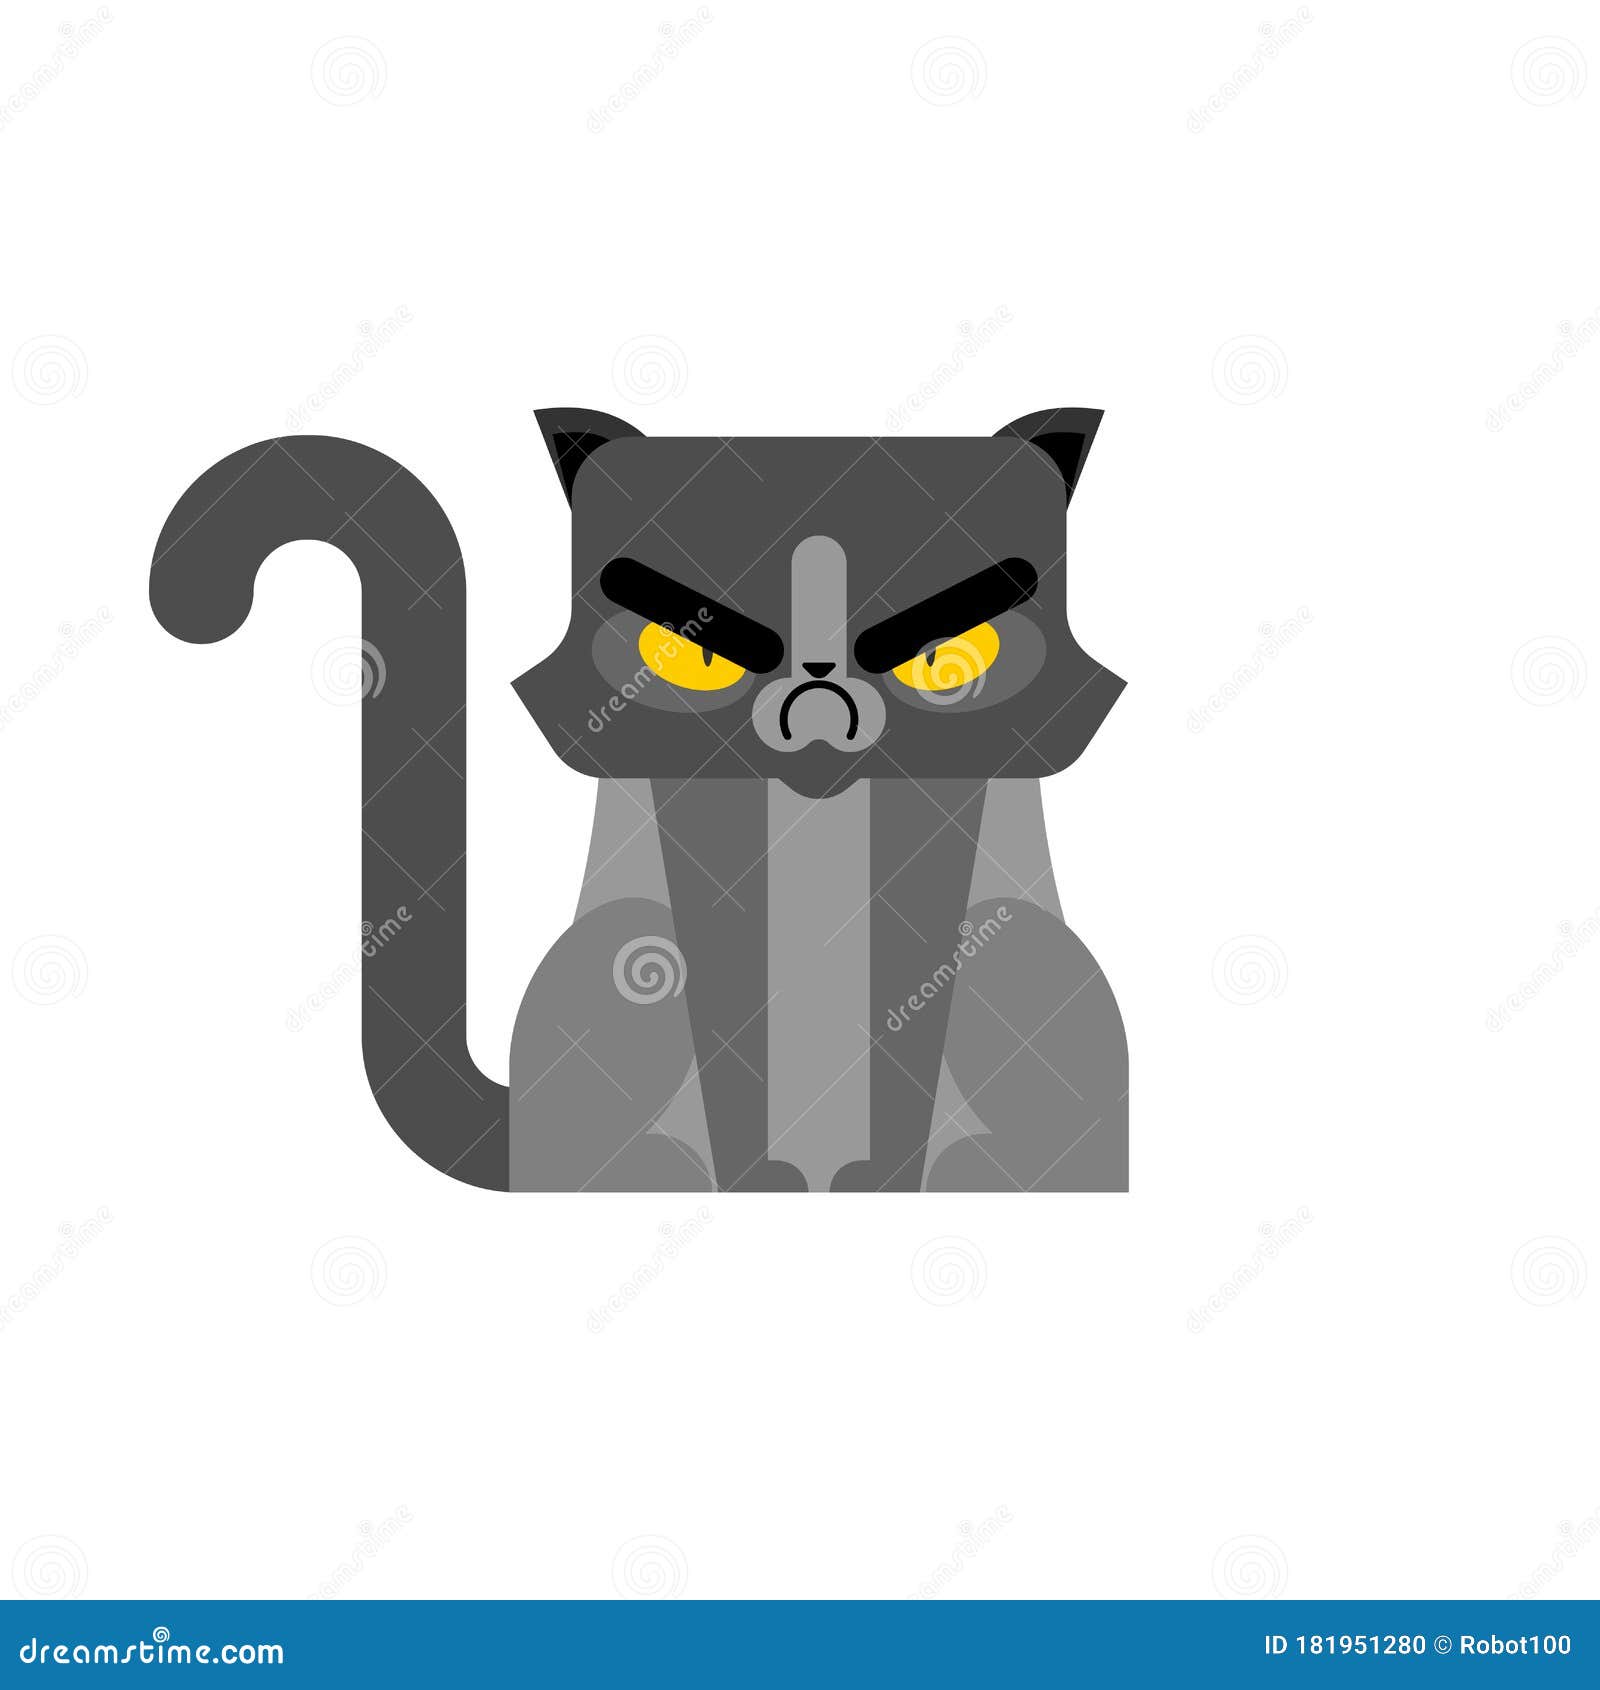 Angry grumpy cat emoji face Royalty Free Vector Image